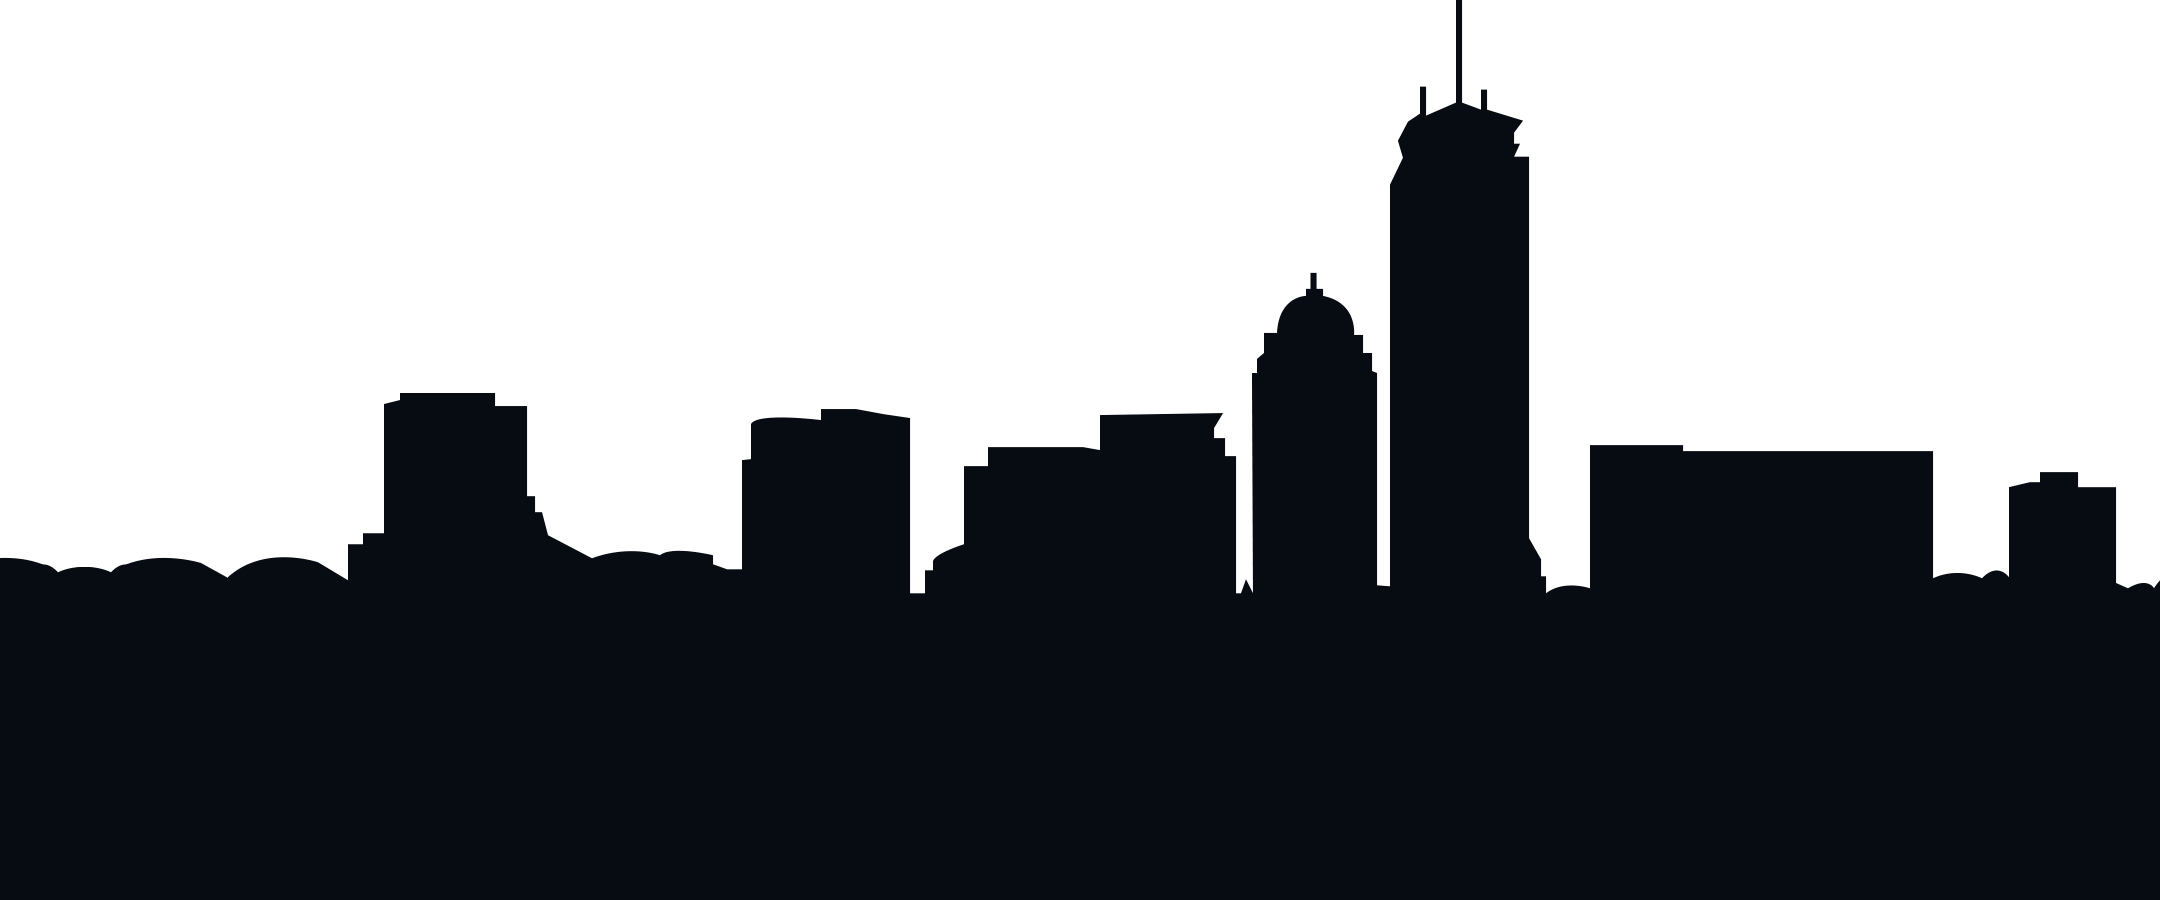 Skyline silhouette royalty free. Cityscape clipart city boston